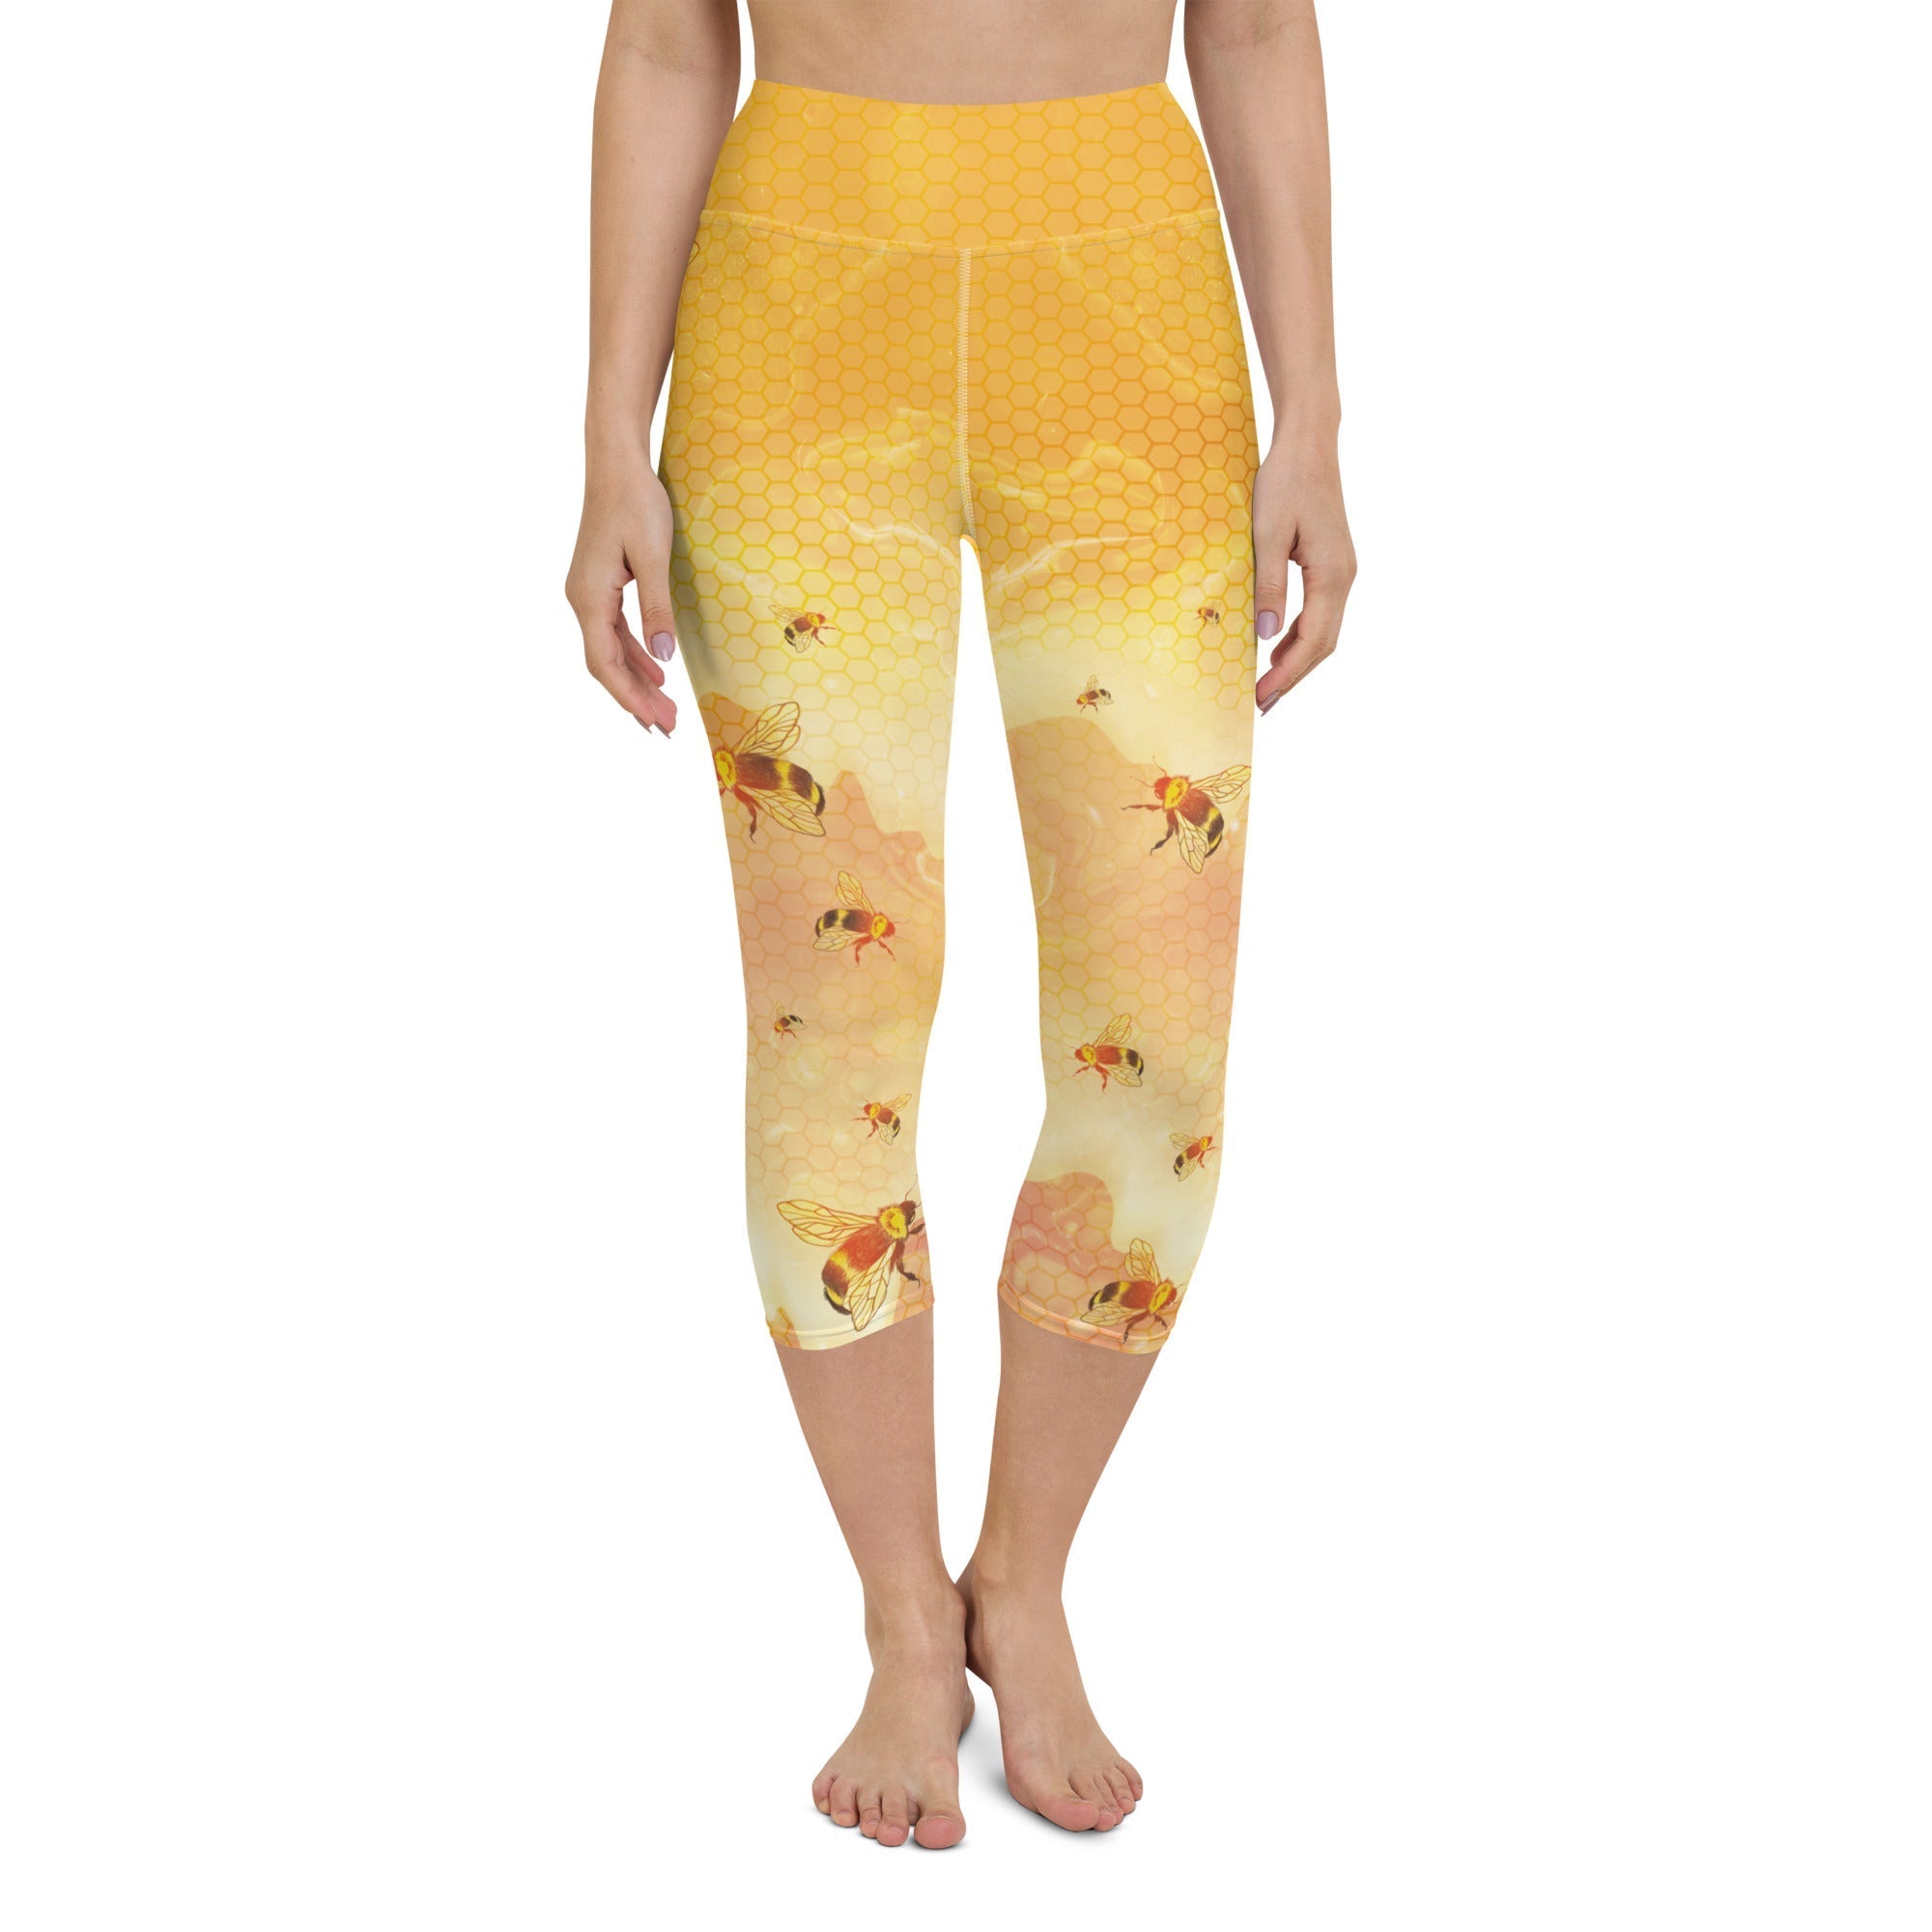 Honey Bee Leggings, Honeycomb Leggings, Printed Tights, Yoga Pants